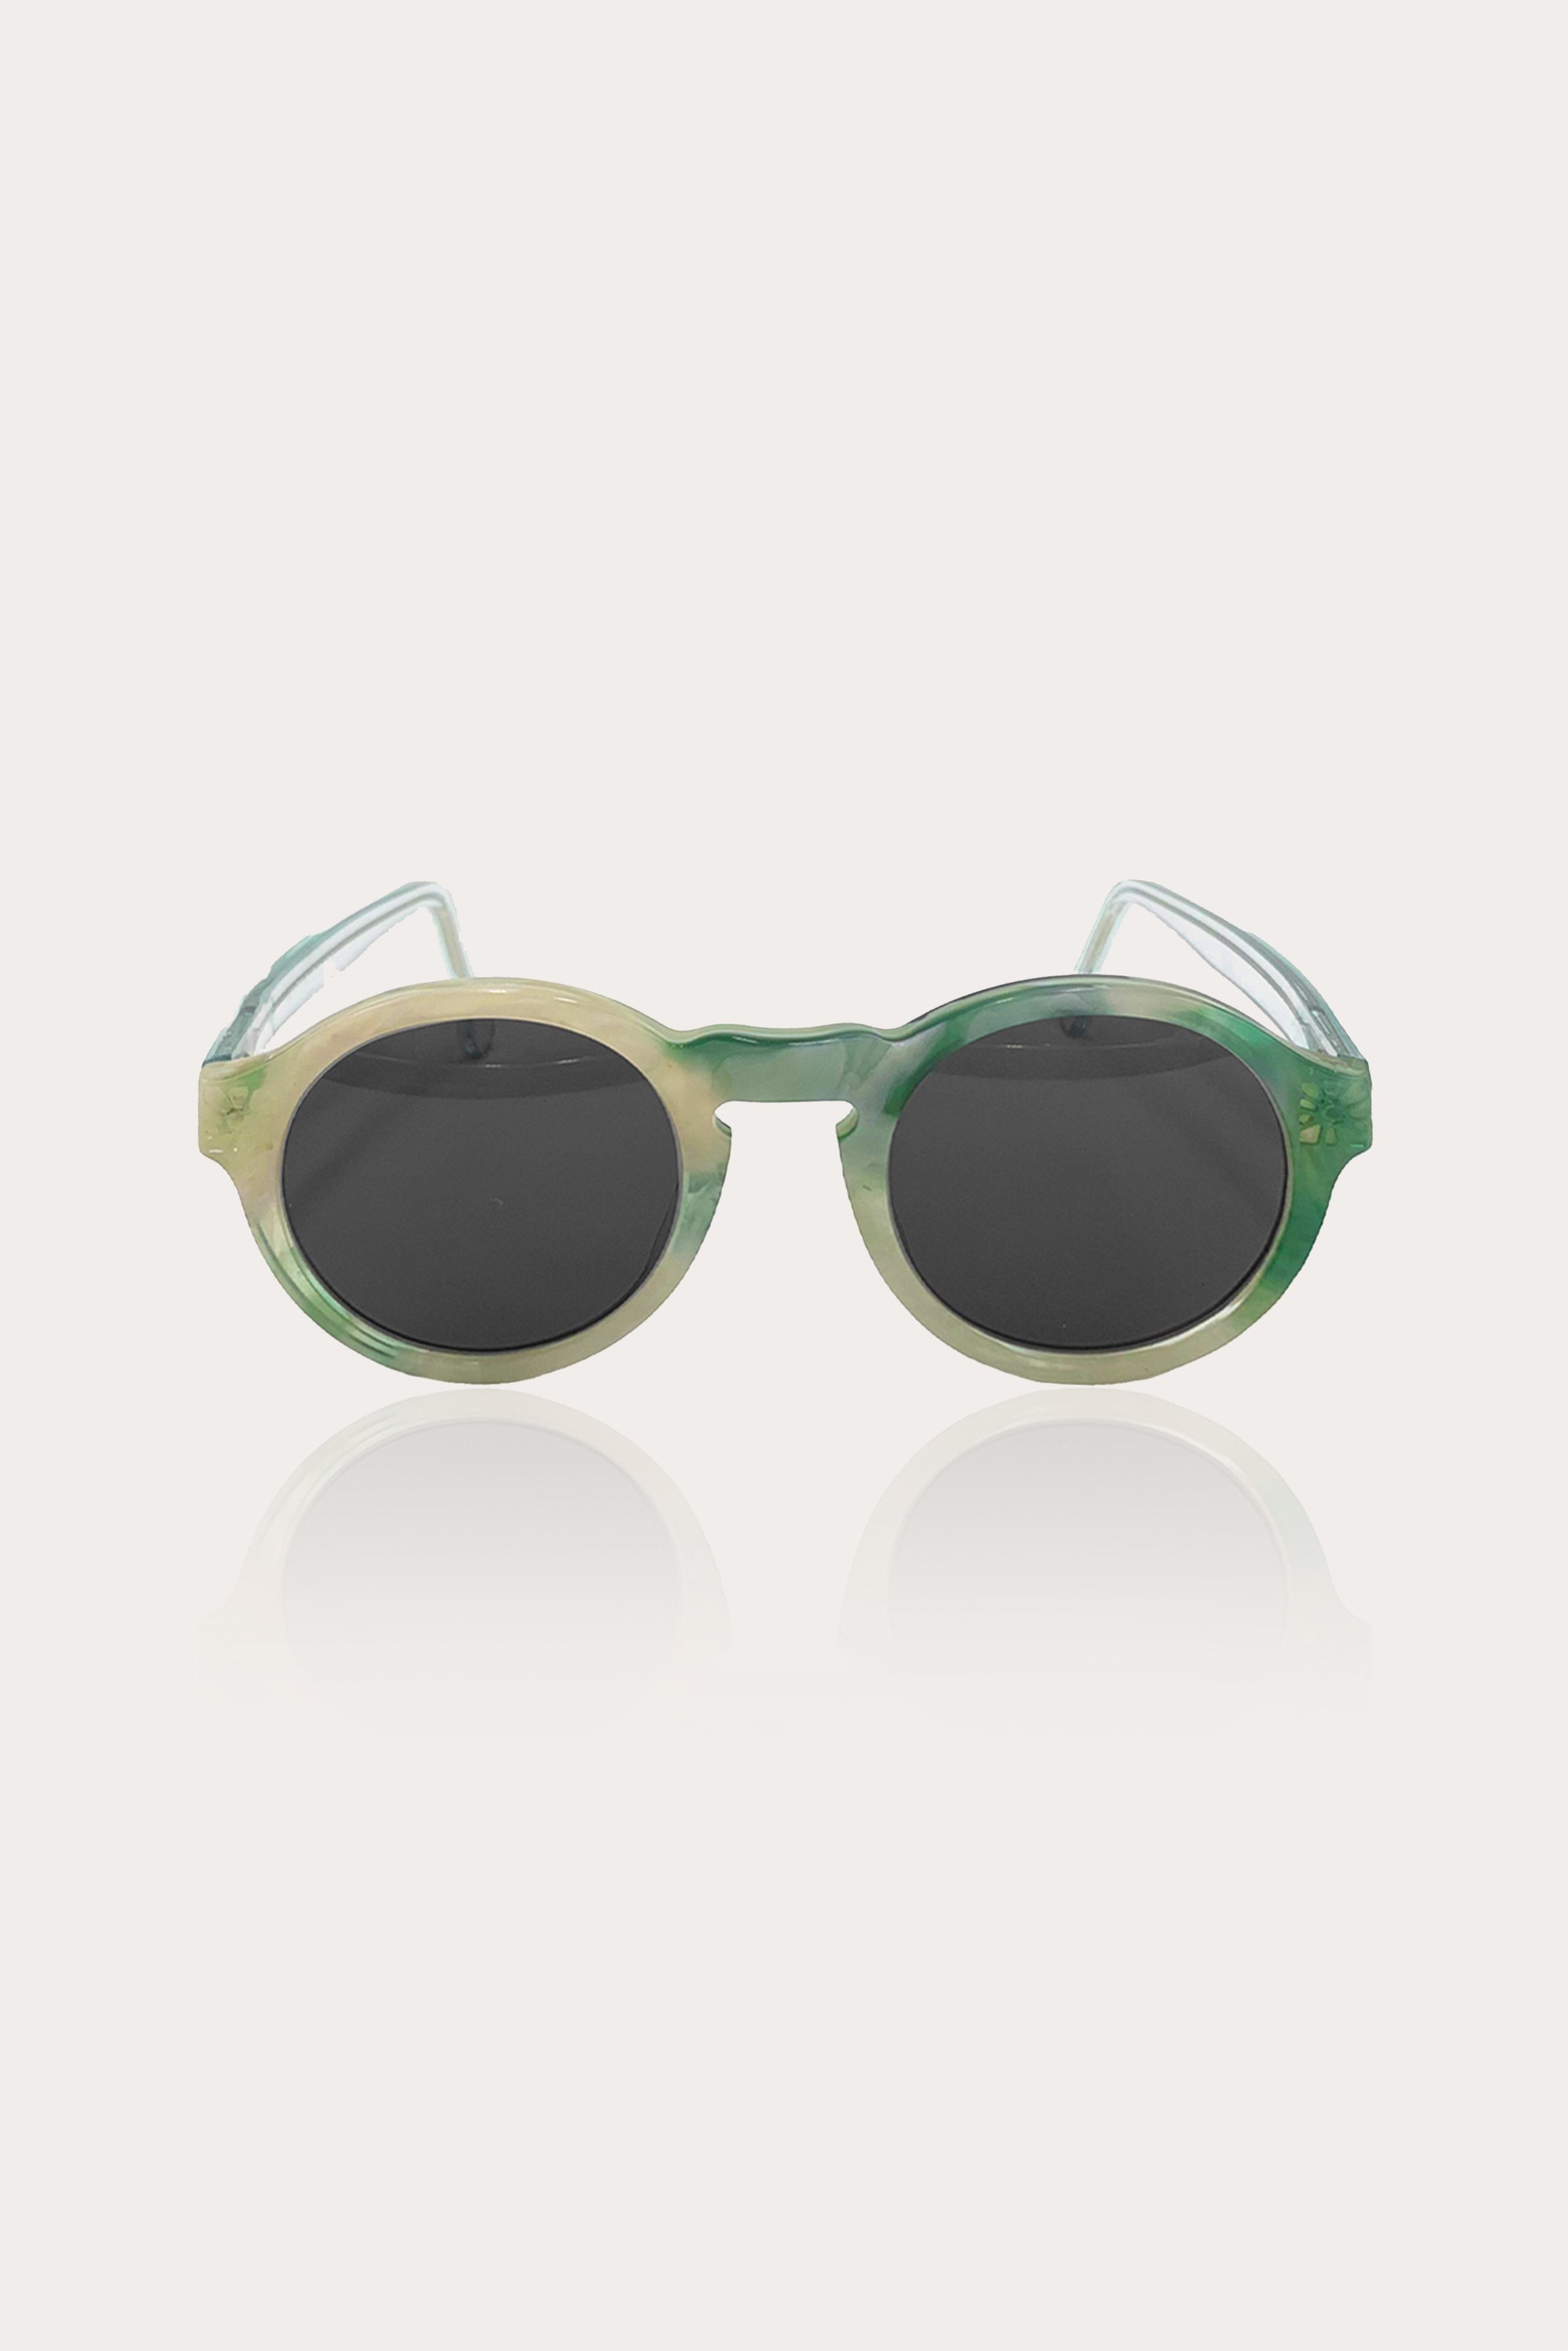 Recycled Acetate Round Sunglasses in Jade Multi